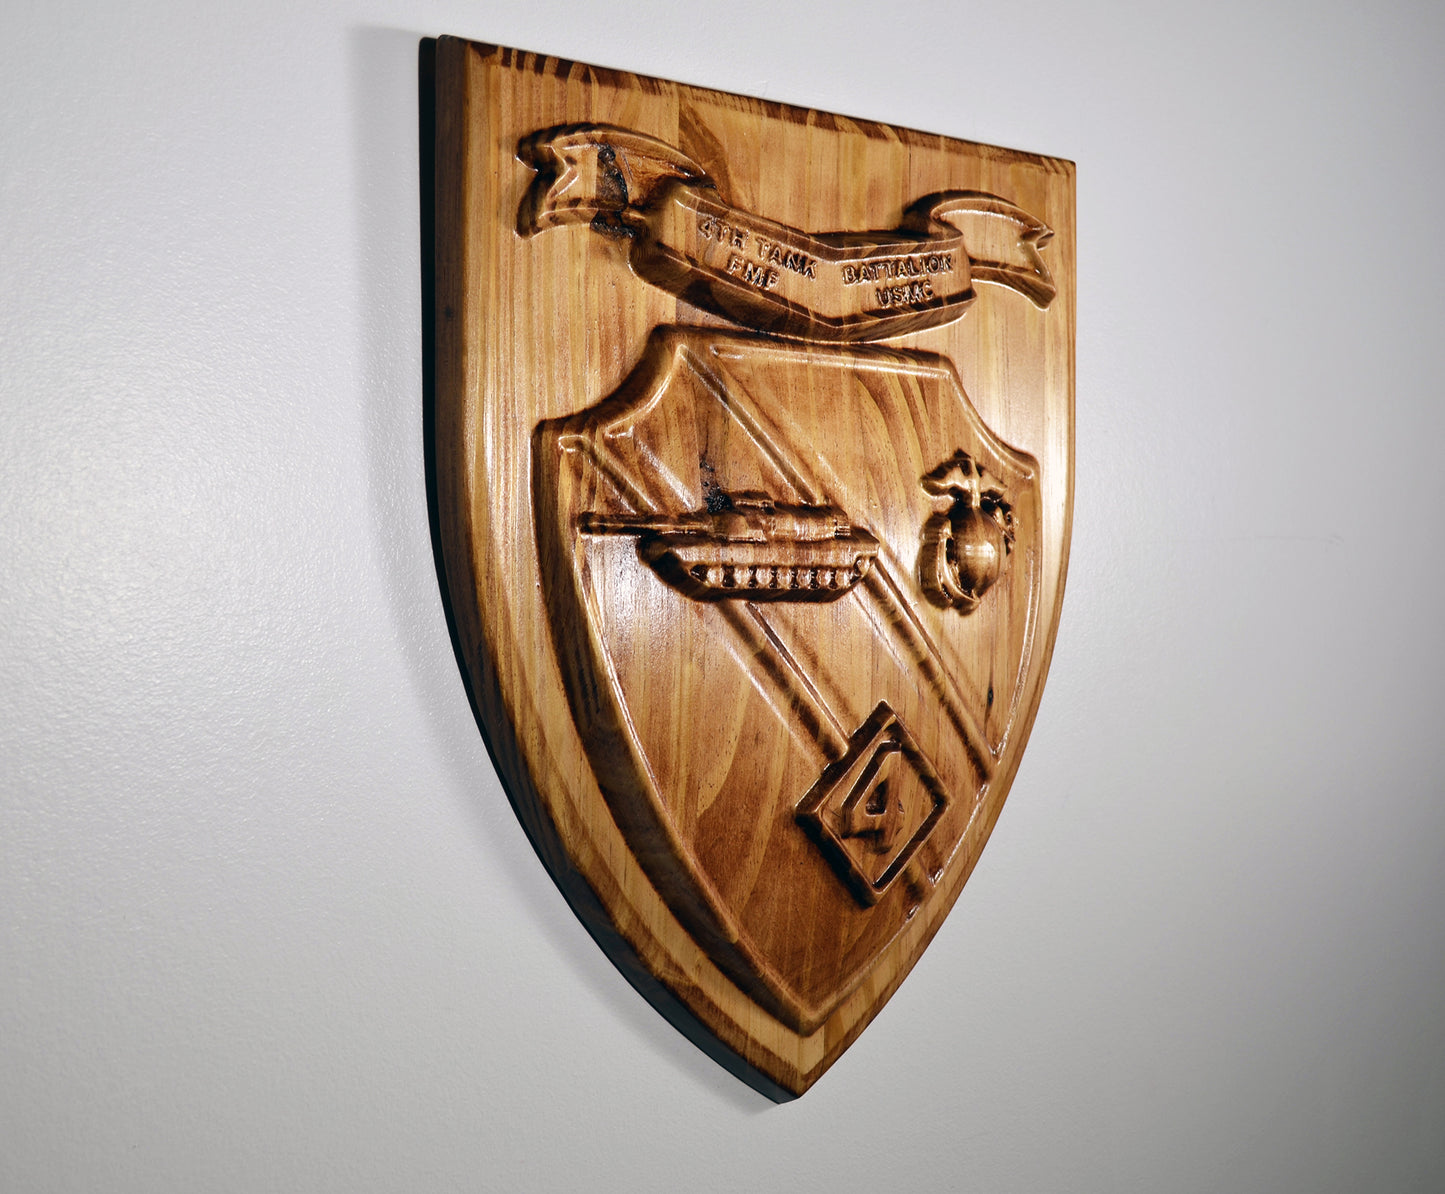 USMC 4th Tank Battalion, US Marine Corps, 3d wood carving, military plaque